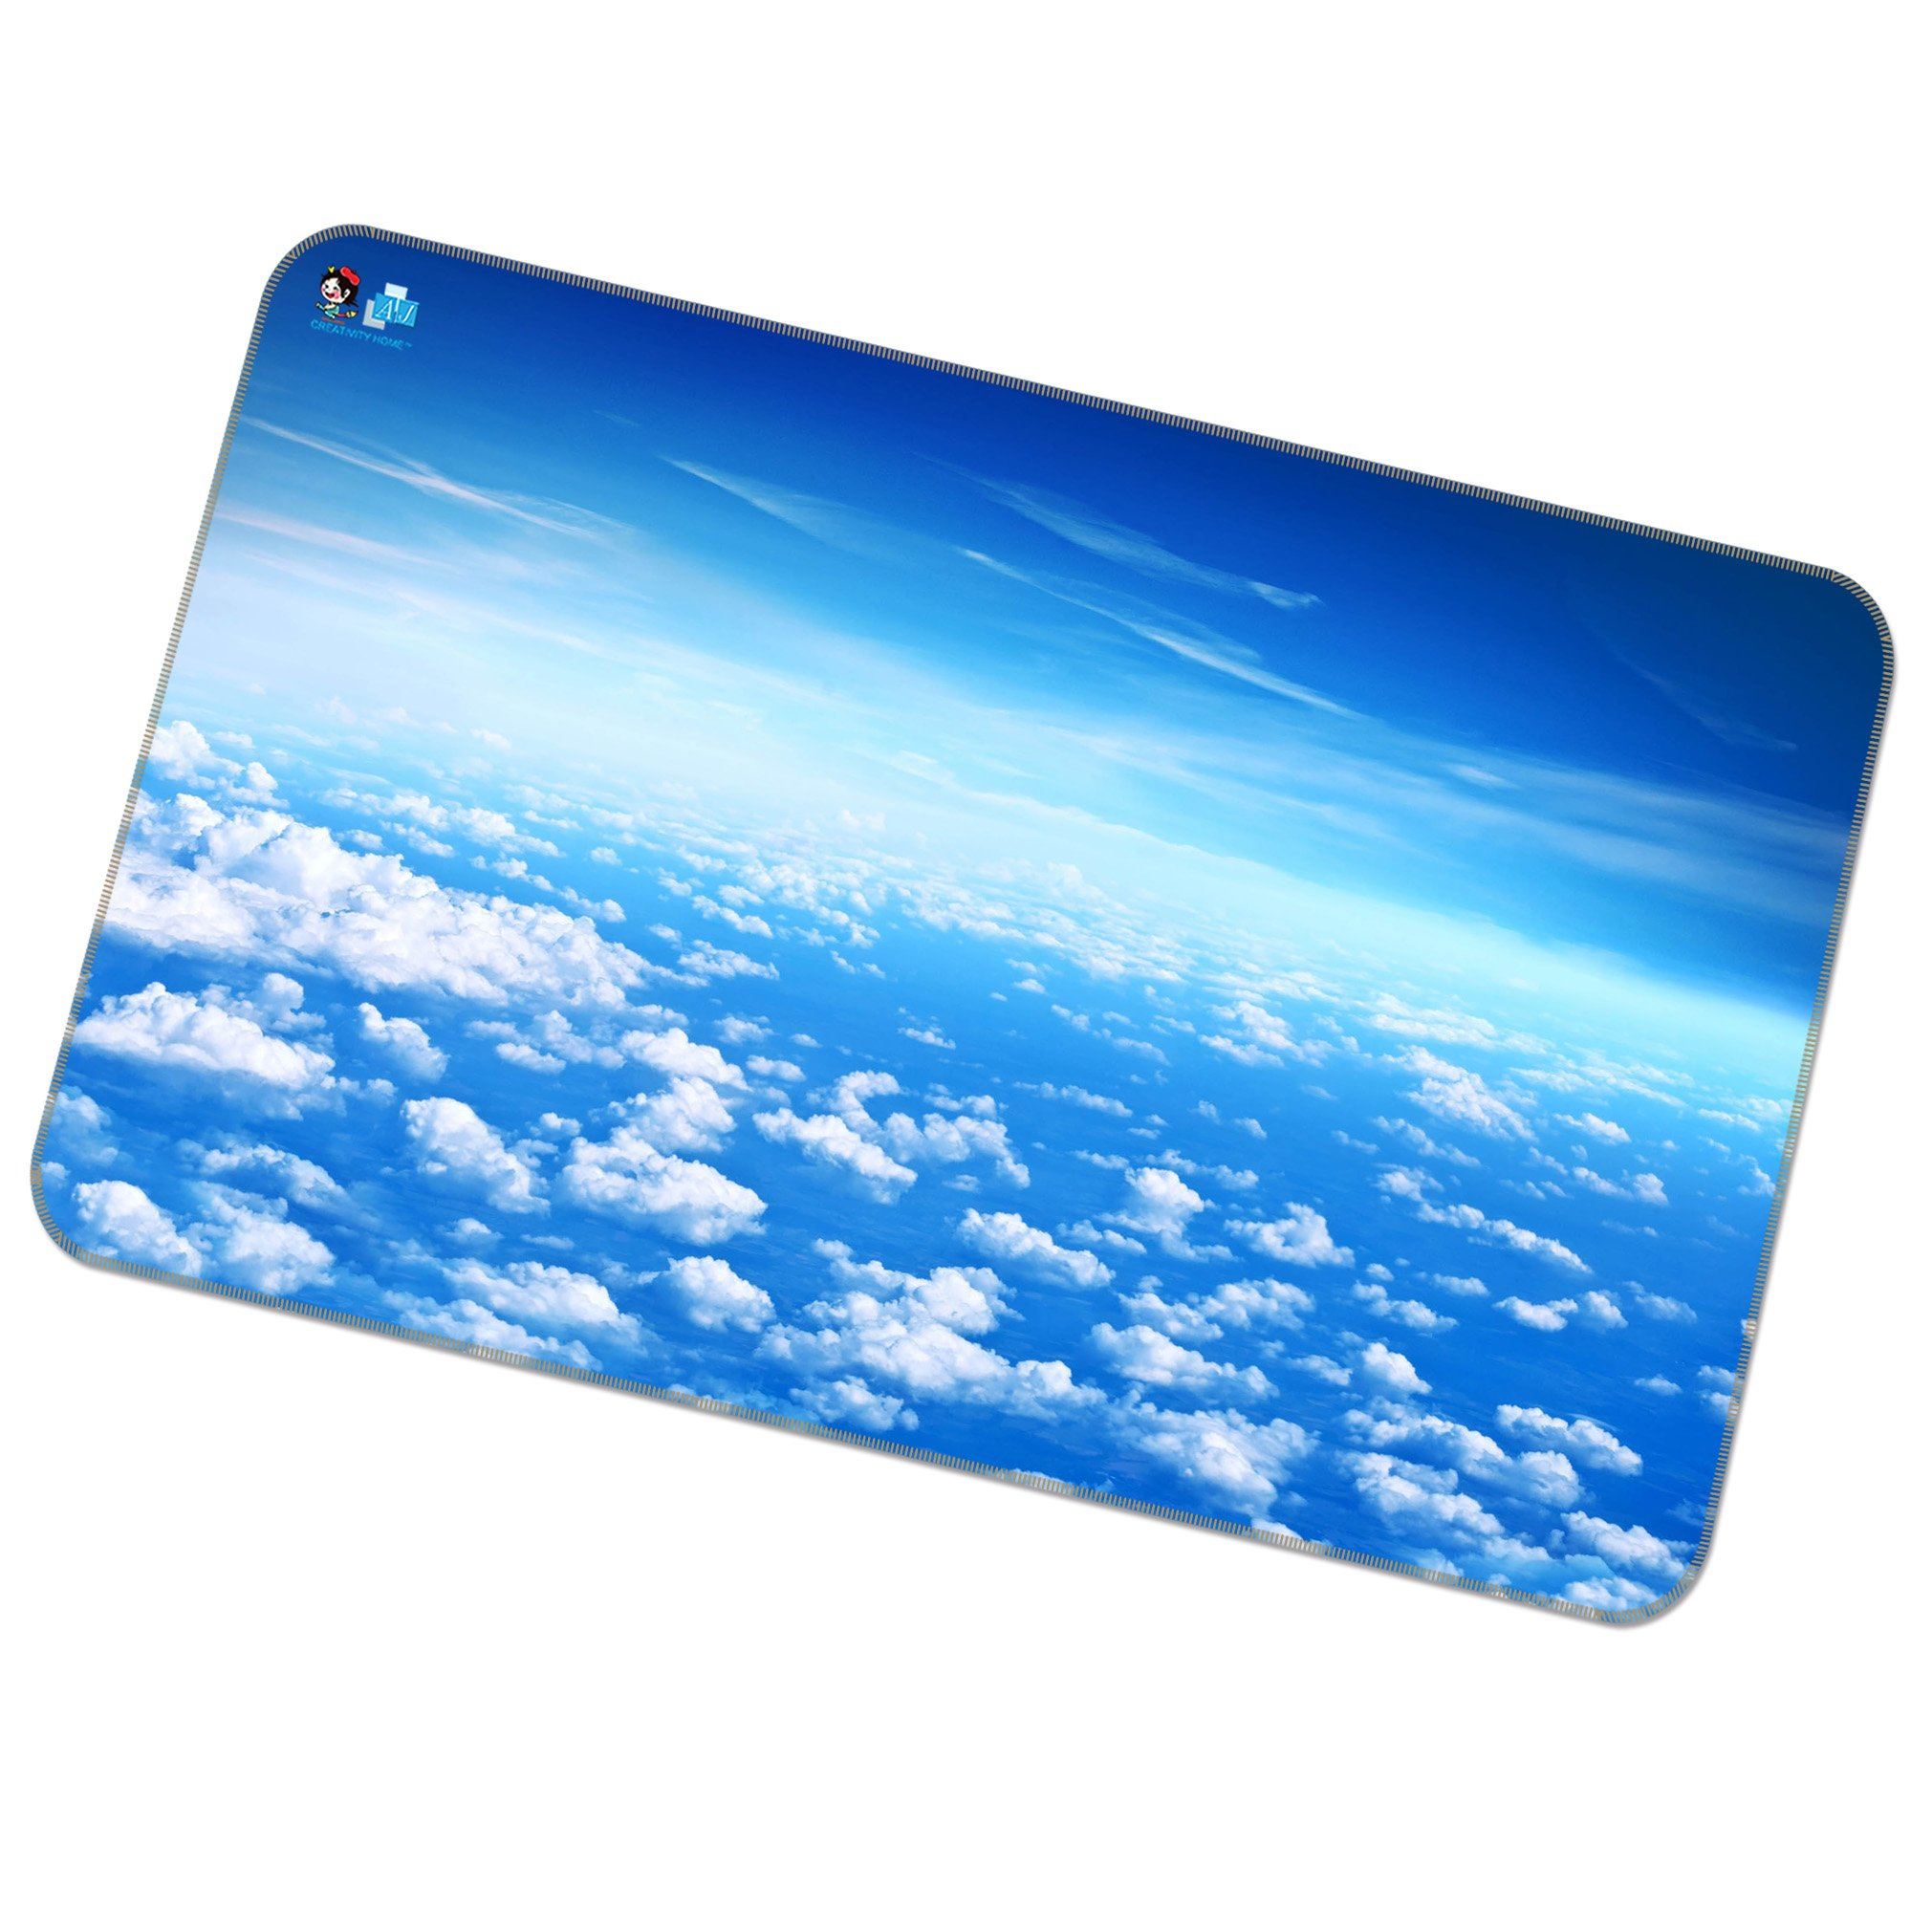 3D Blue Sky Floating Clouds 156 Non Slip Rug Mat Mat AJ Creativity Home 